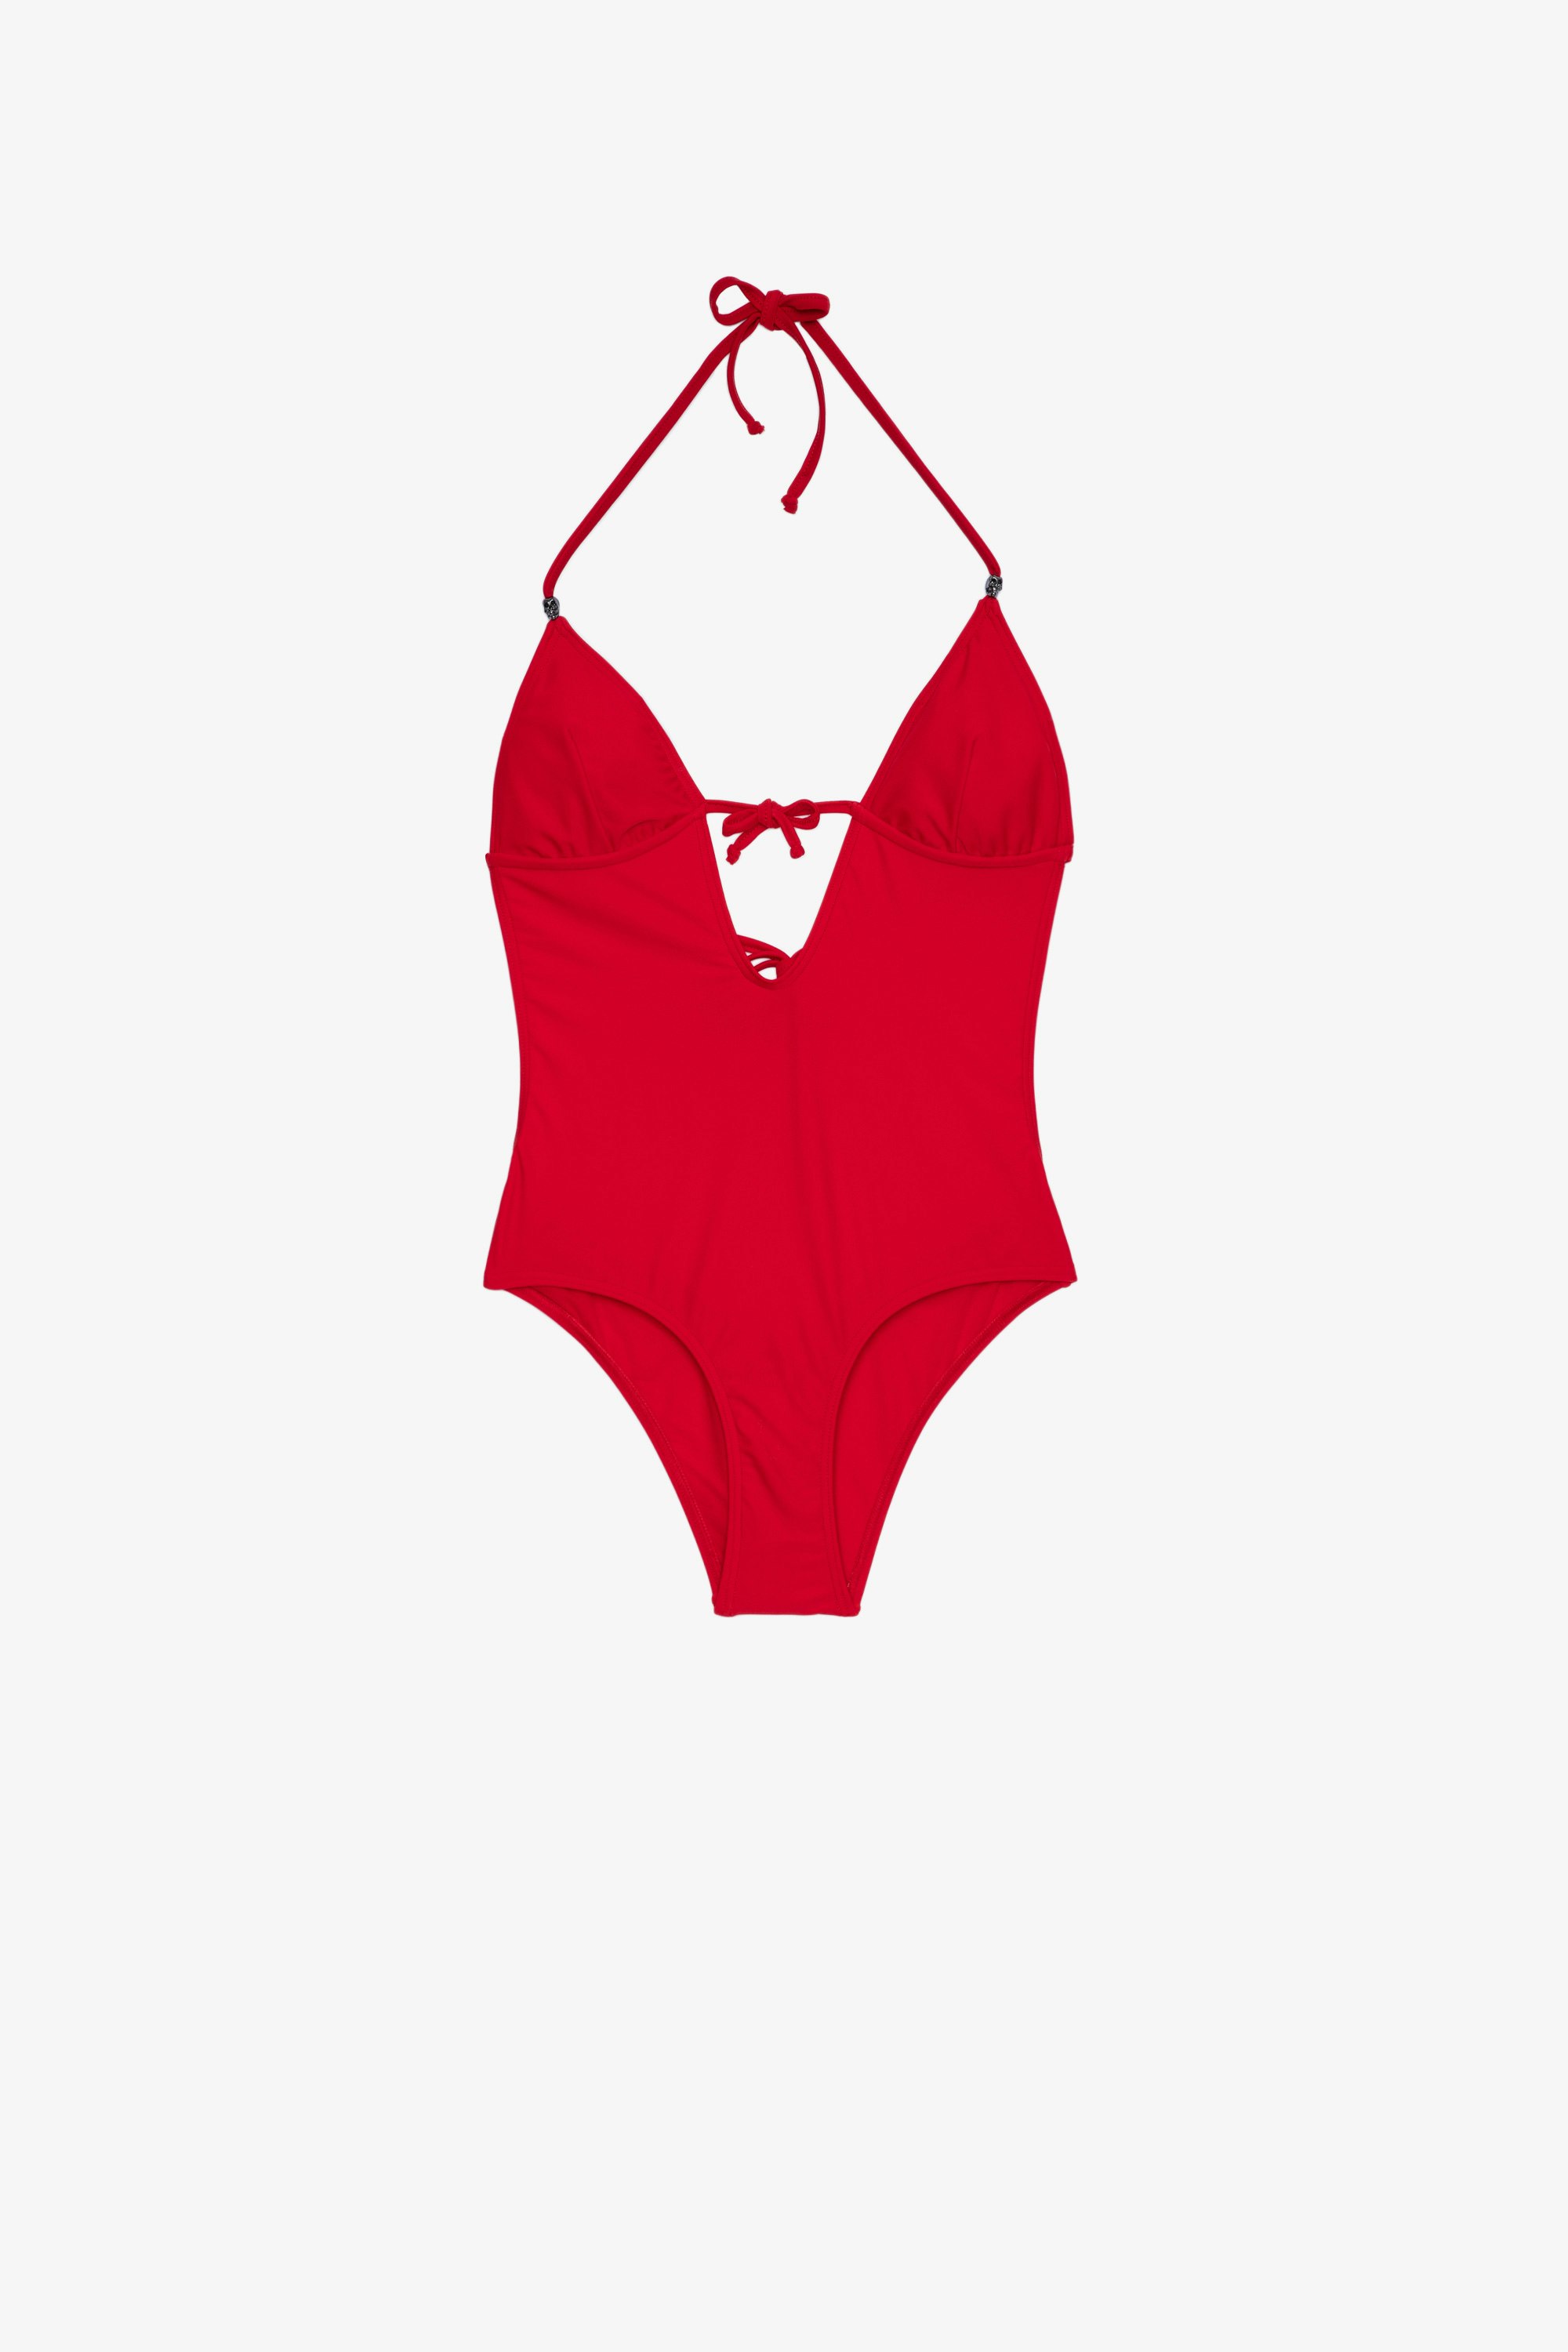 Badeanzug Skull Roter, einteiliger Damen-Badeanzug